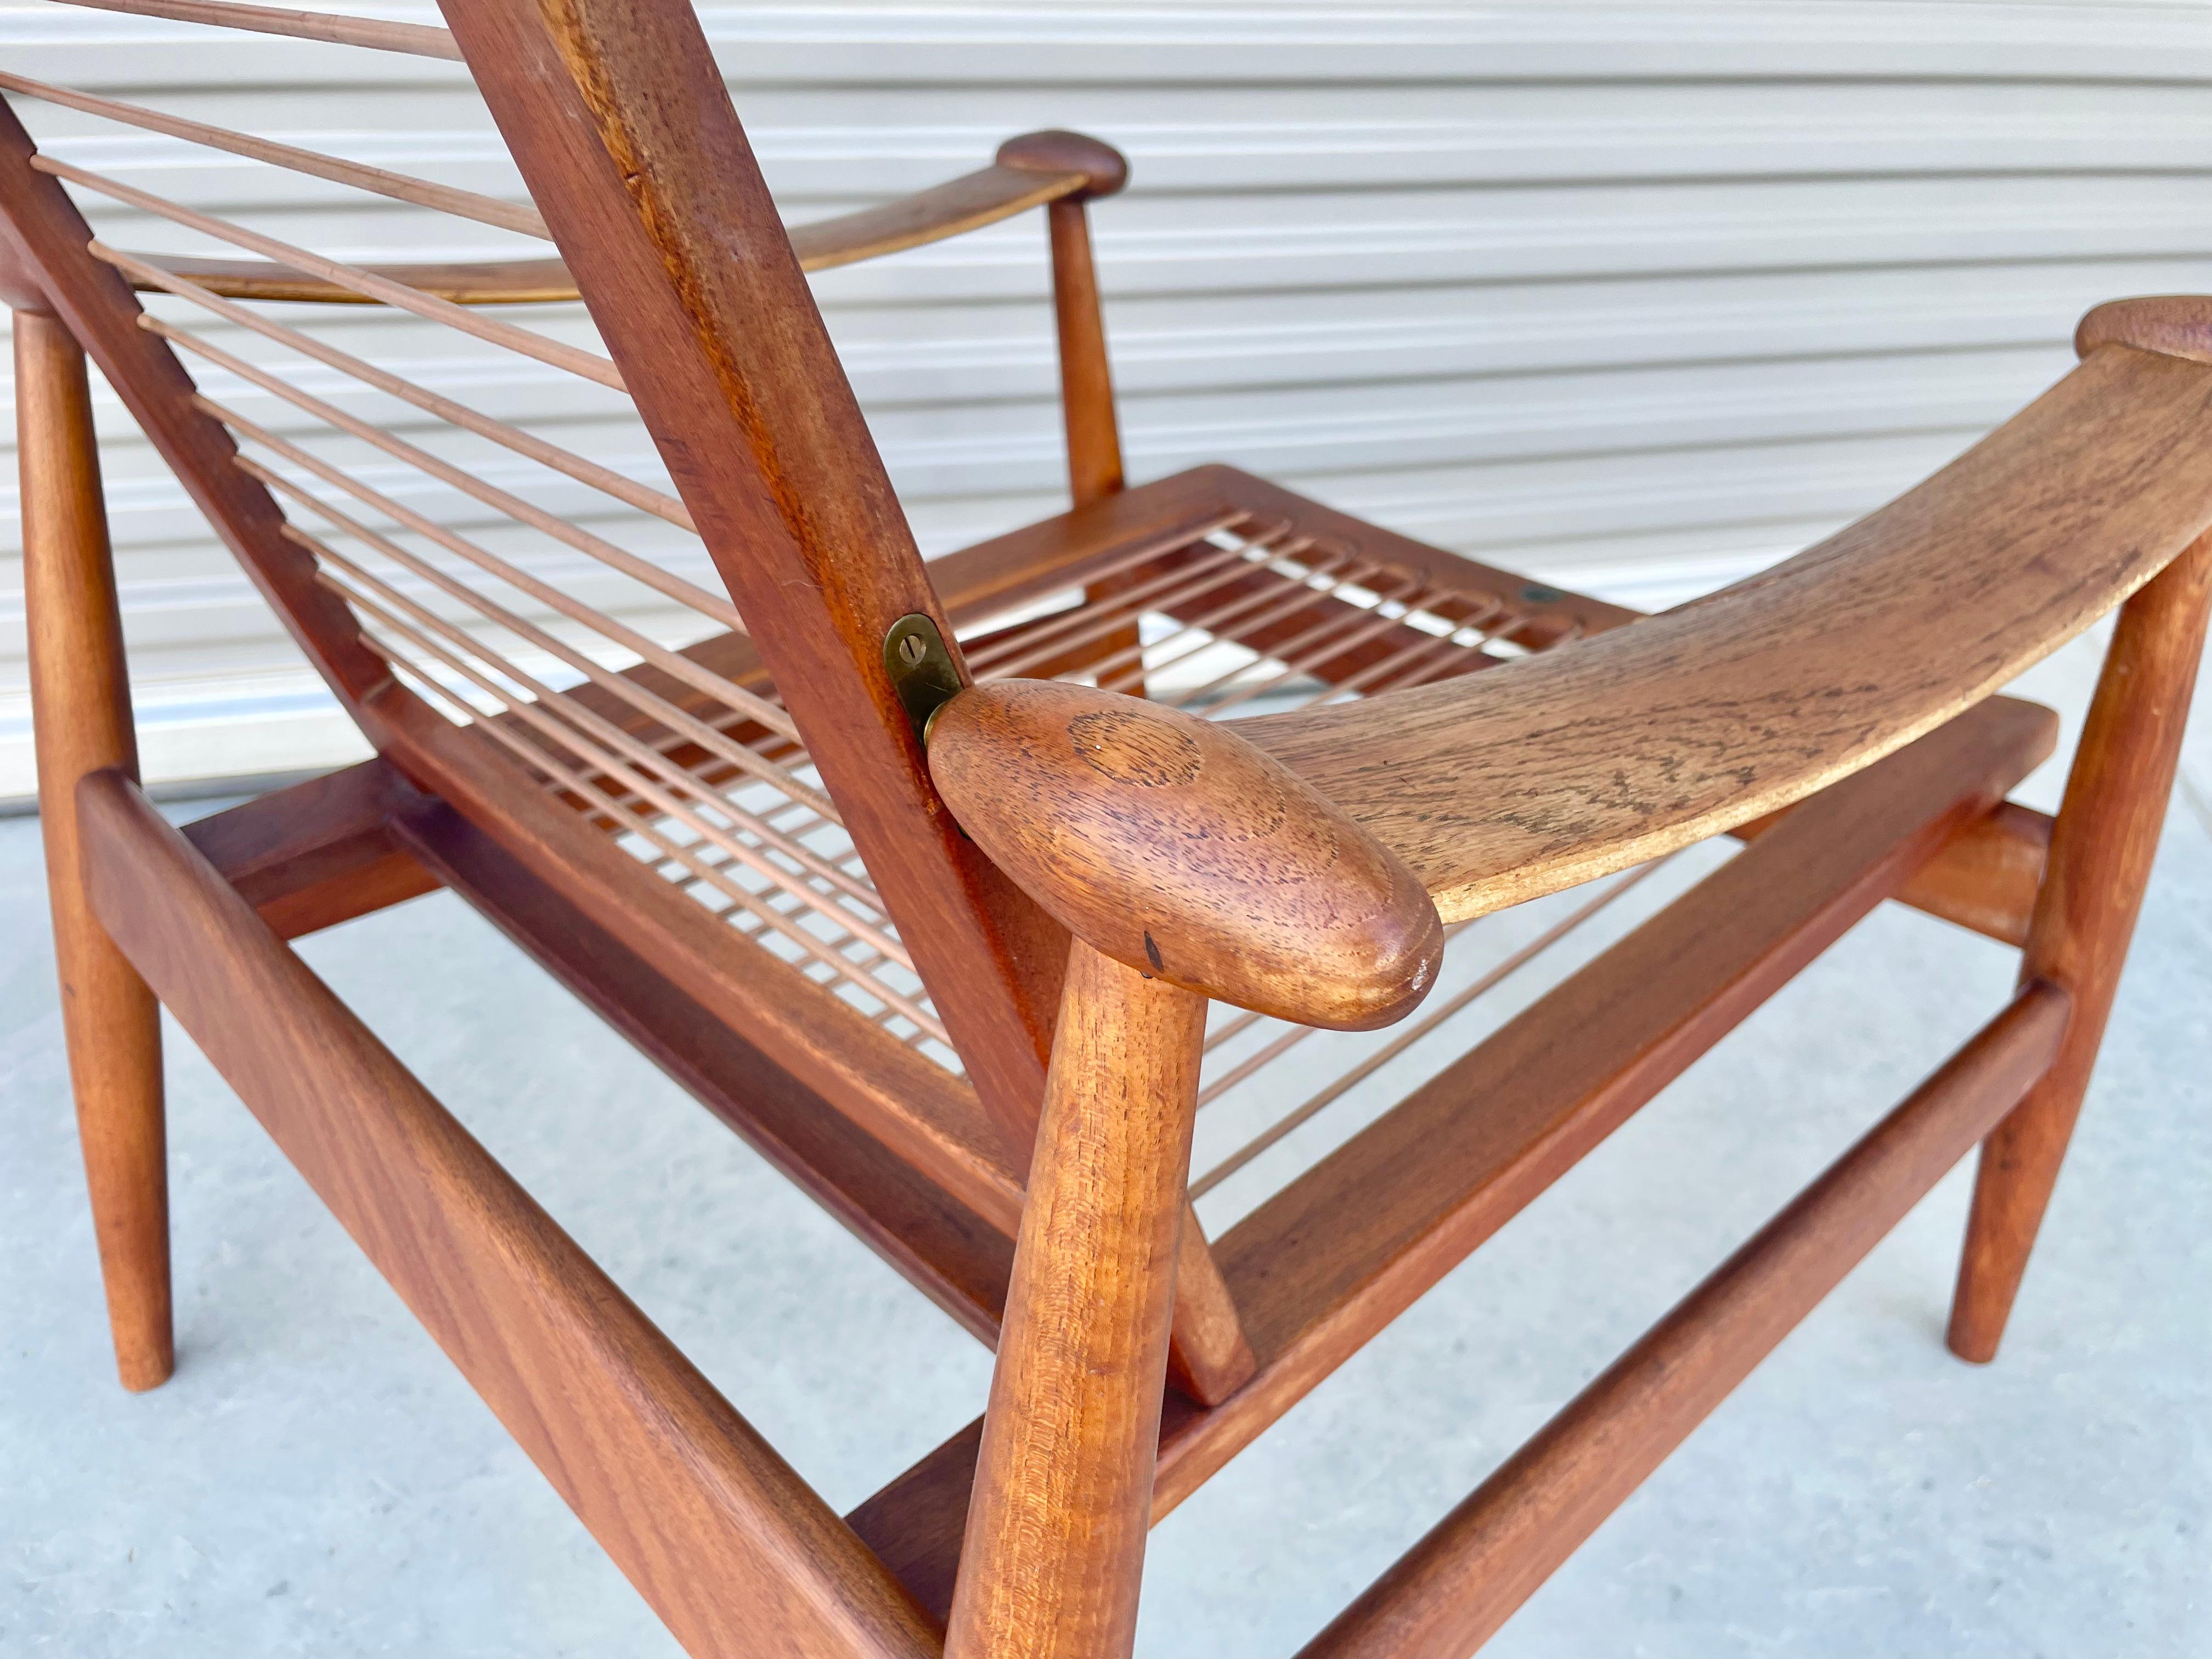 Mid-20th Century Danish Modern Teak Spade Lounge Chair by Finn Juhl for France & Søn For Sale